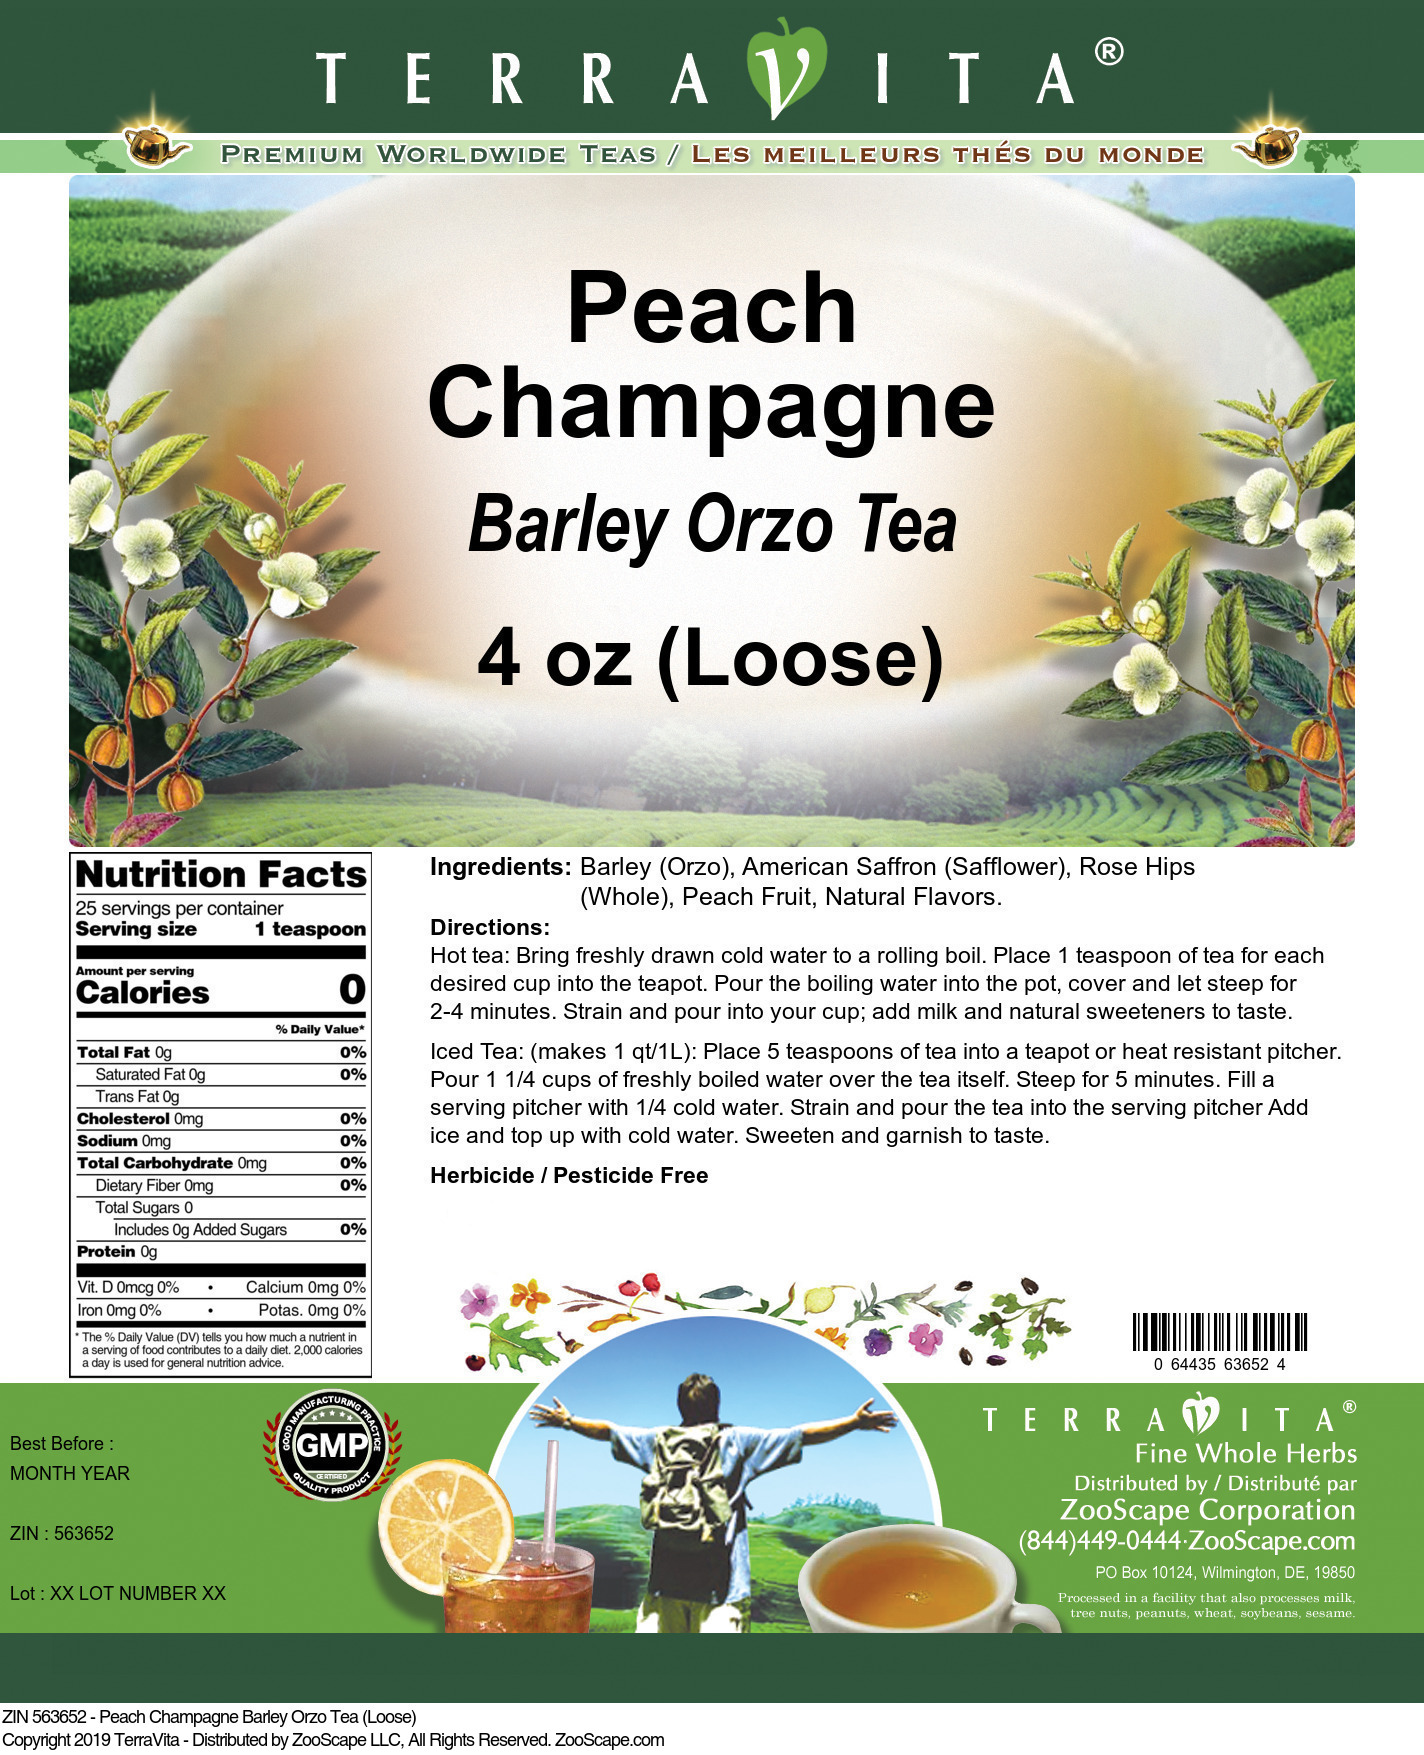 Peach Champagne Barley Orzo Tea (Loose) - Label